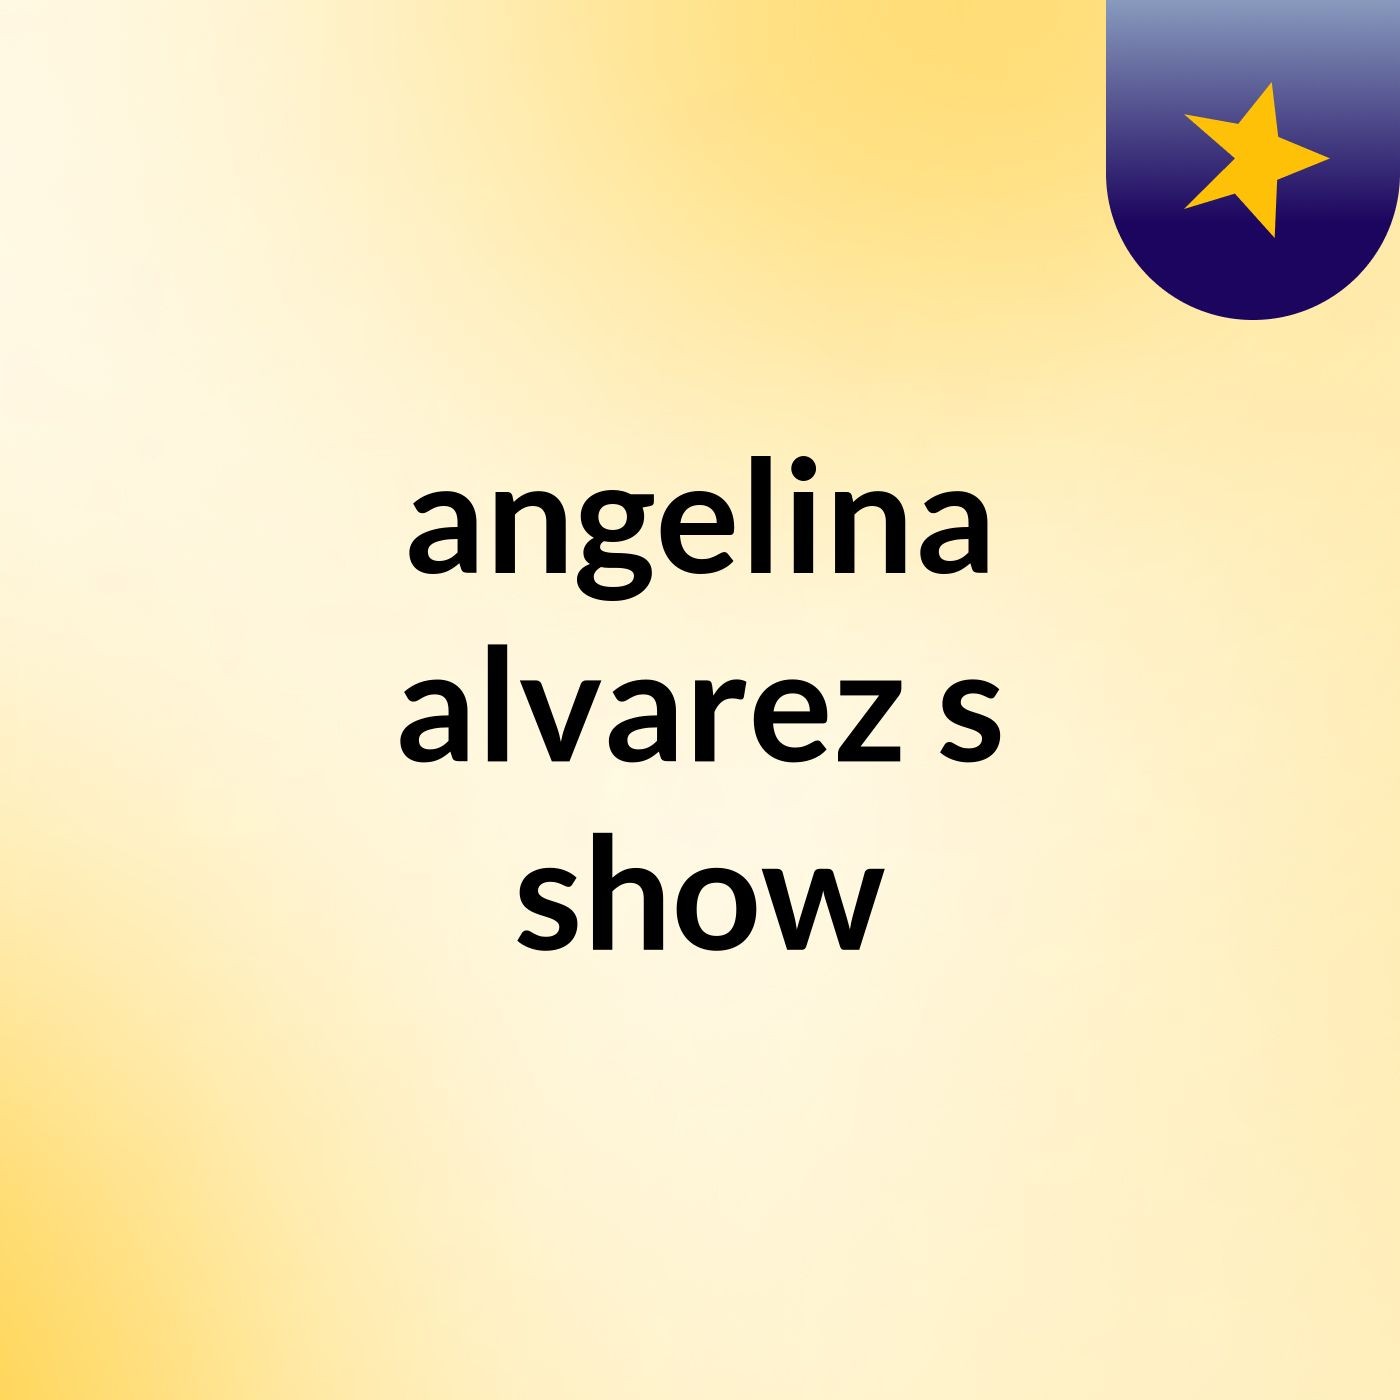 angelina alvarez's show